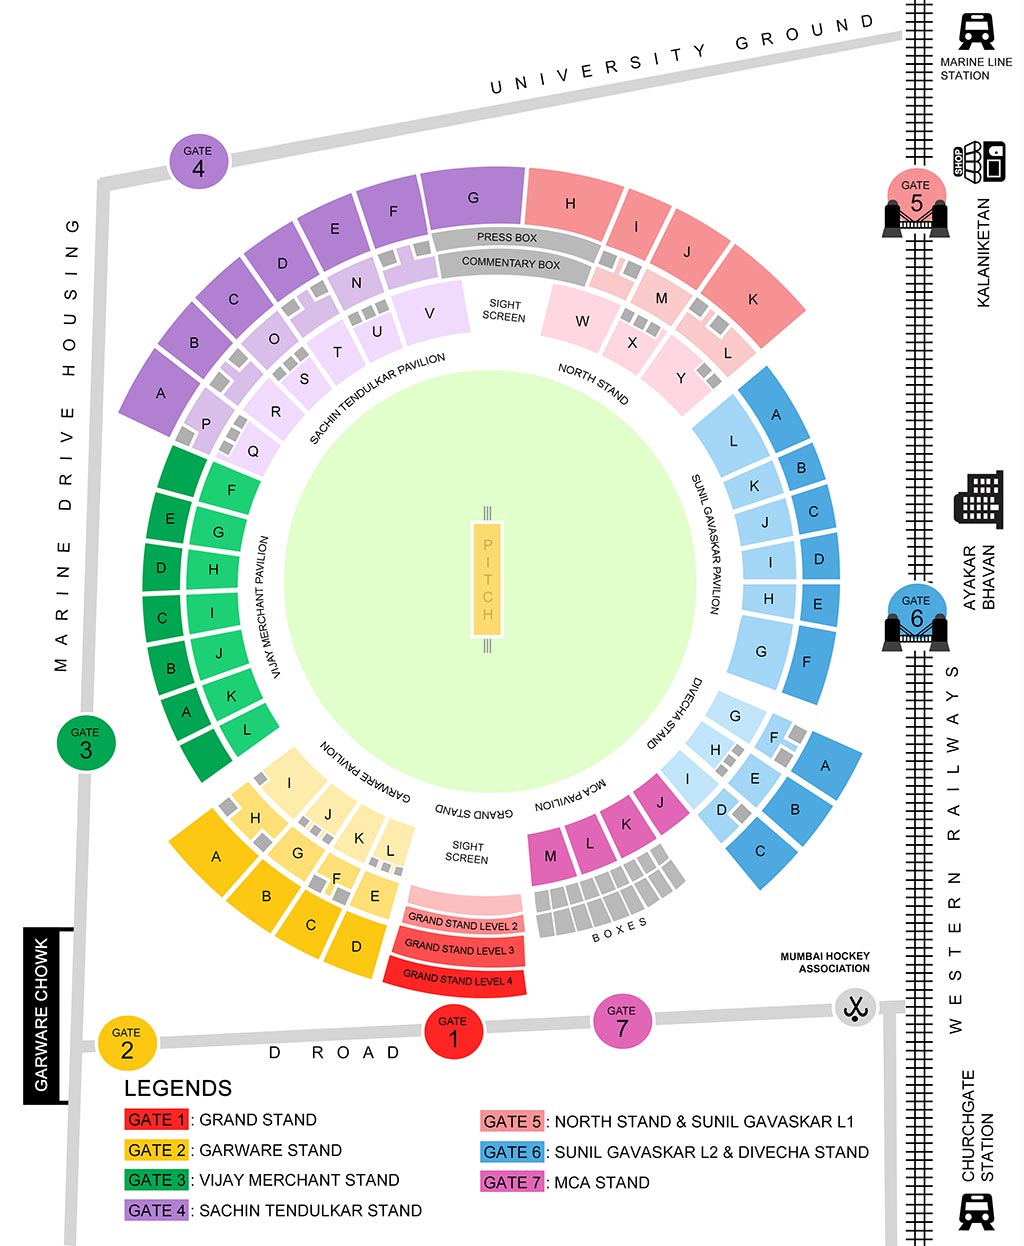 Mumbai Wankhede Stadium India West Indies 29 October Tickets and Price